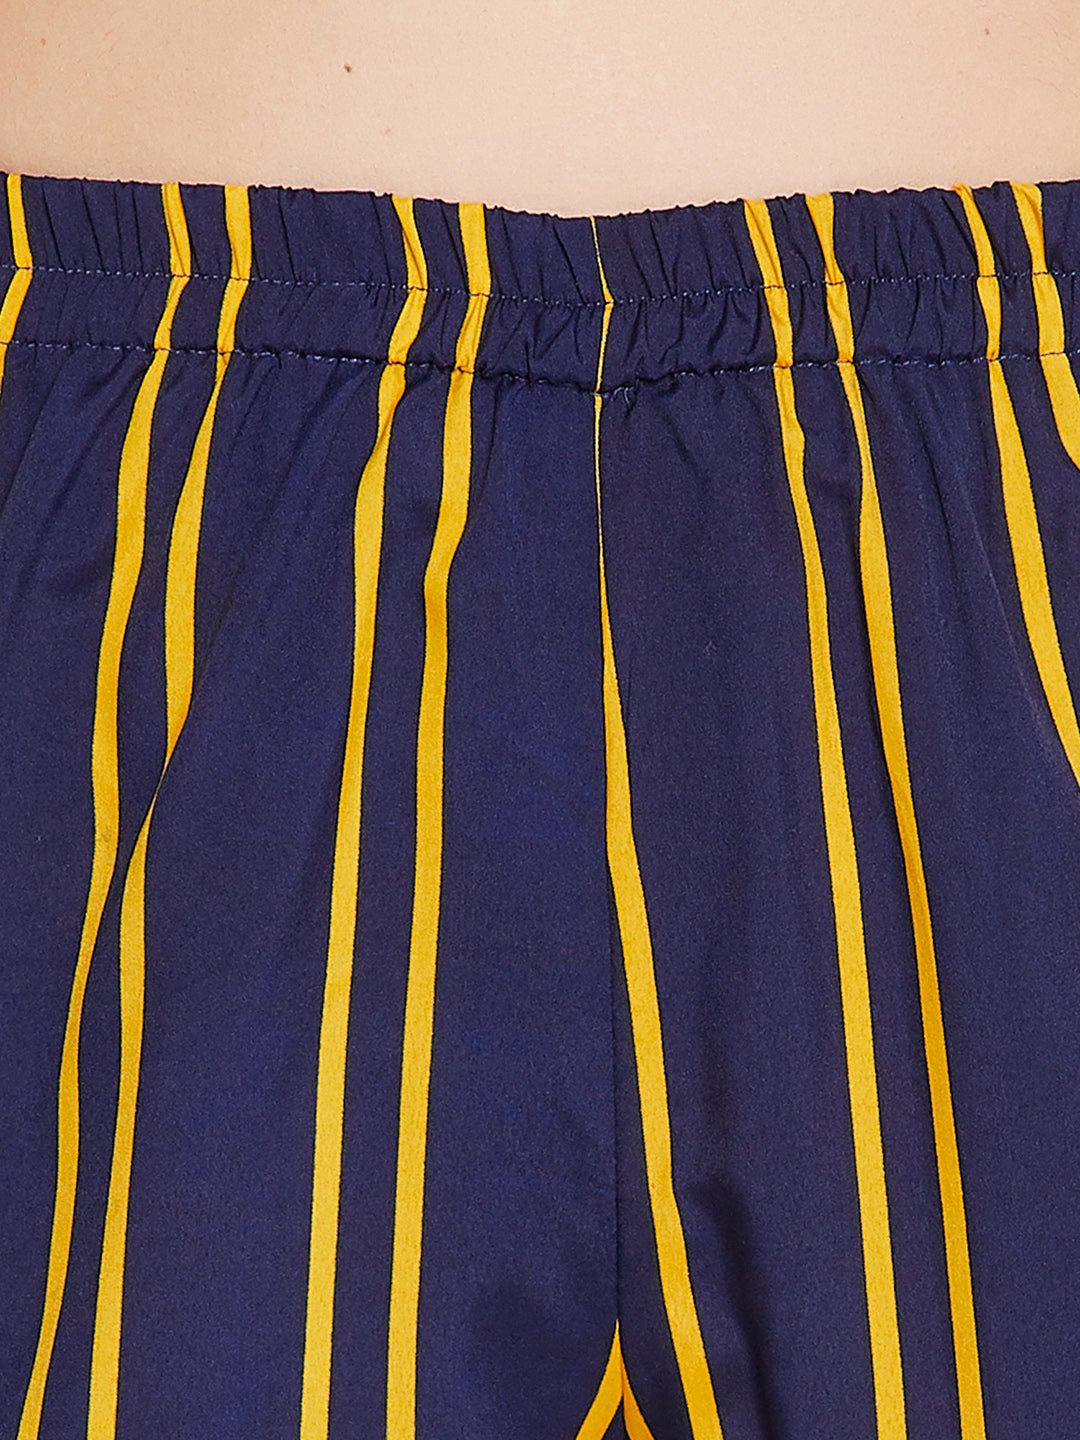 Navy & Yellow Striped Top & Shorts Set